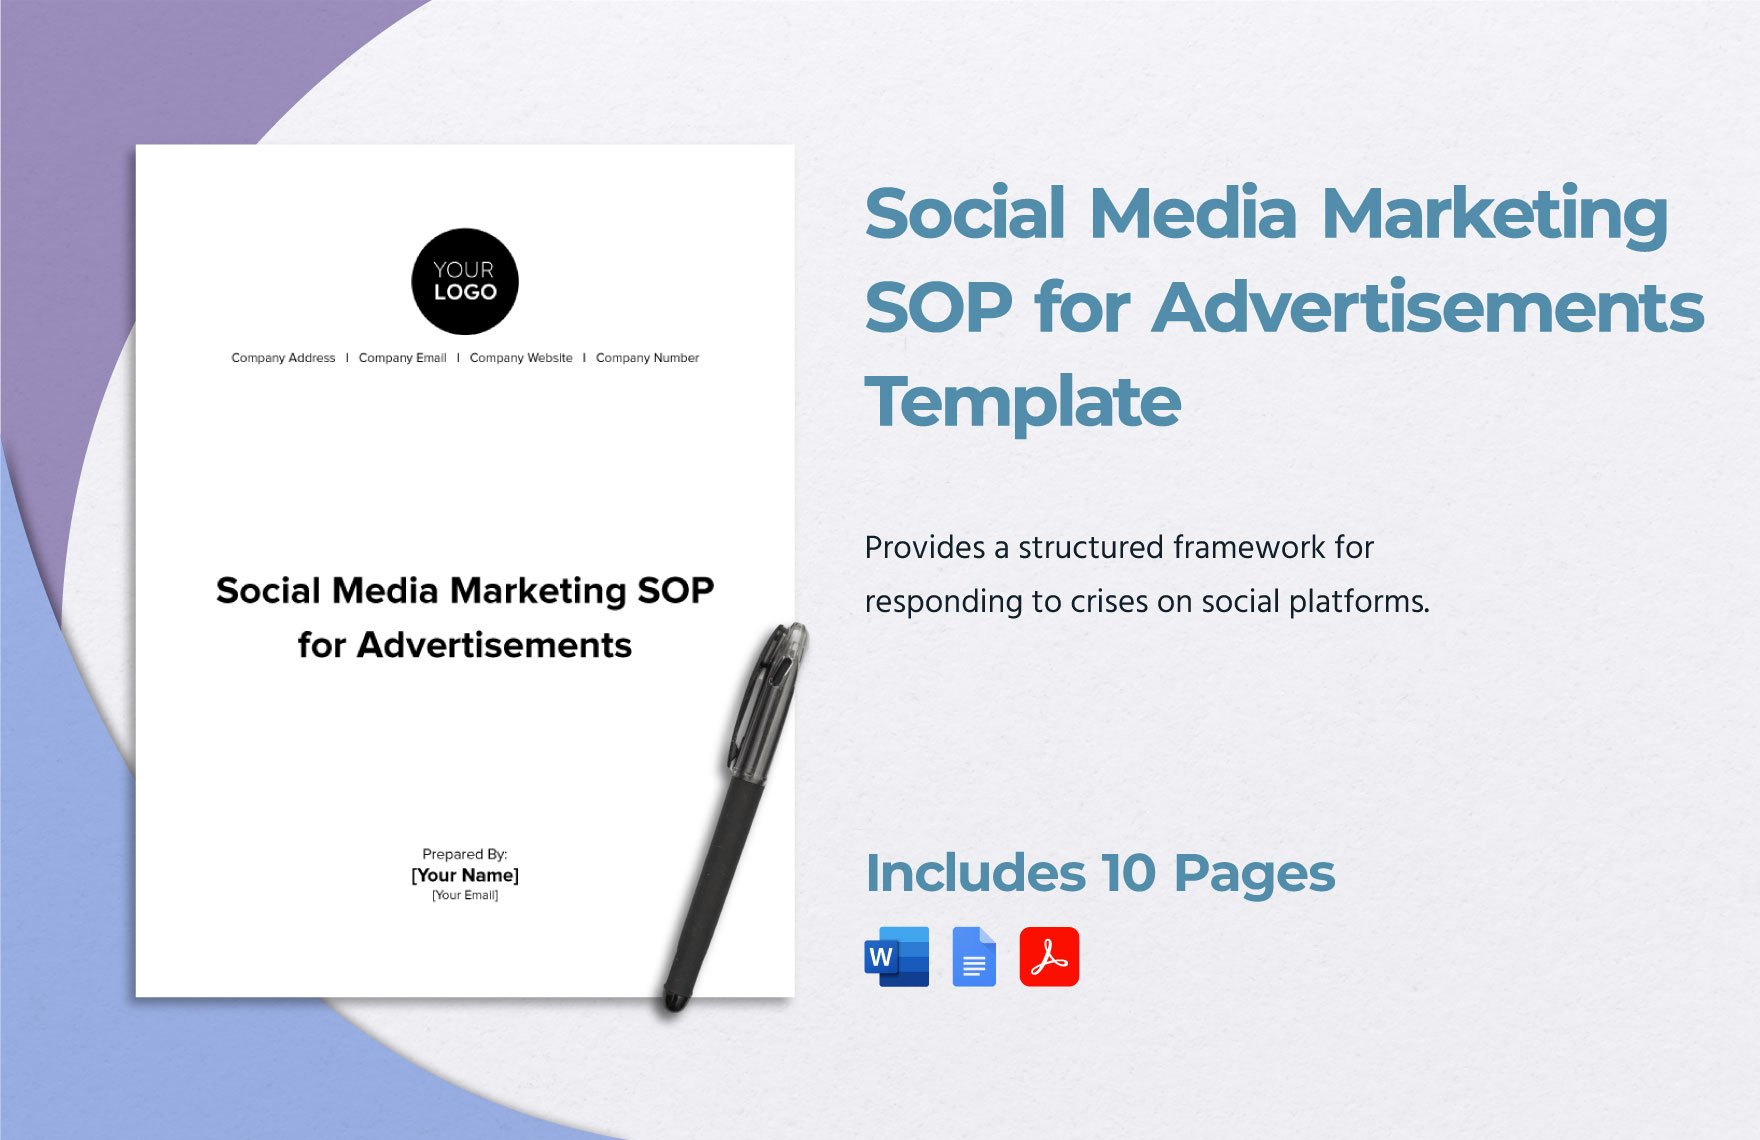 Social Media Marketing SOP for Advertisements Template